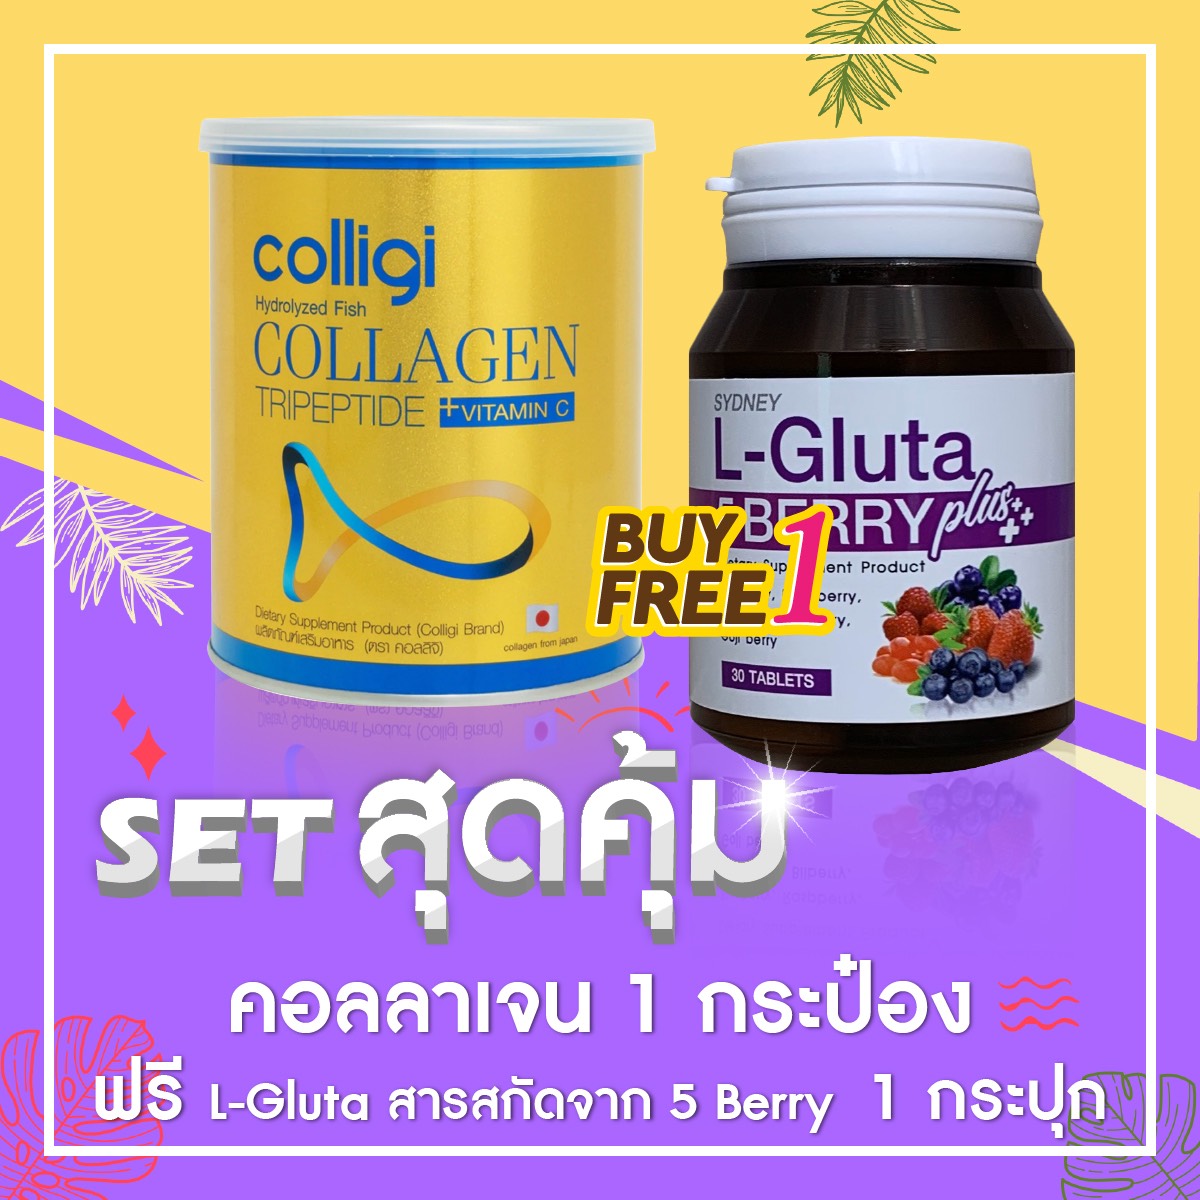 Amado Colligi Collagen TriPeptide + Vitamin C คอลลิจิ คอลลาเจน [110.66 g.] คู่กับL-Gluta 5 berry แอลกลูต้า อาหารเสริมเร่งผิวขาวสูตรใหม่ L Gluta (30 เม็ดx1 กระปุก)